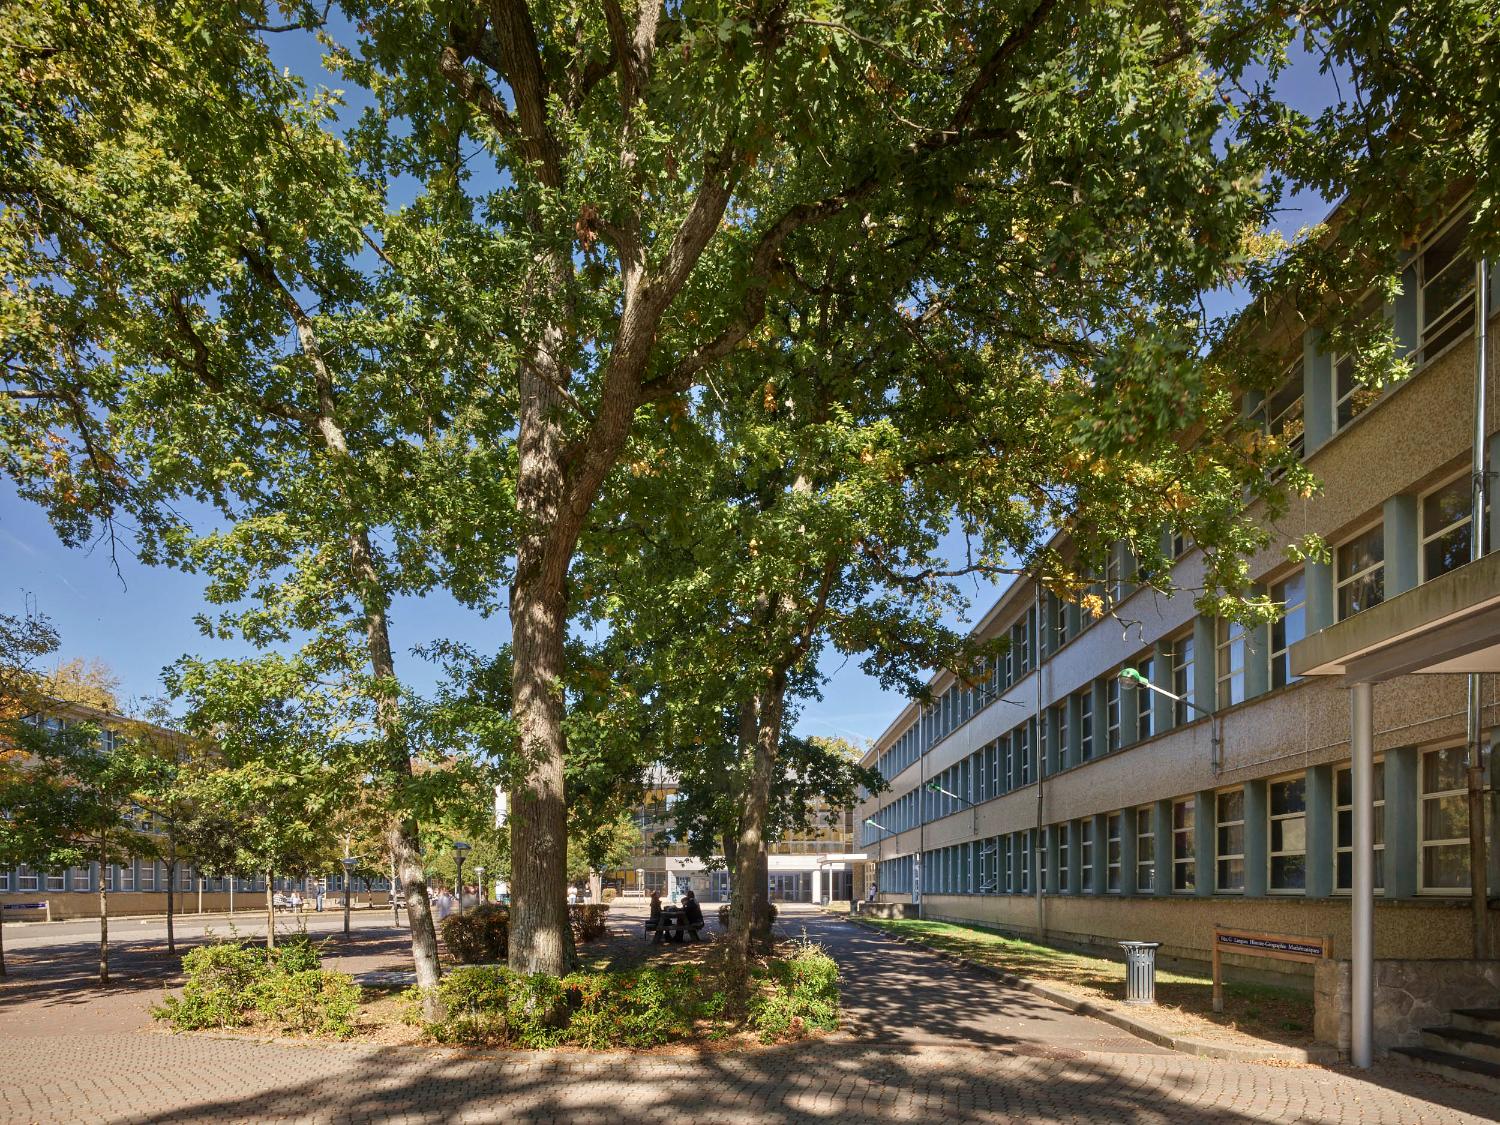 Lycée François-Couperin